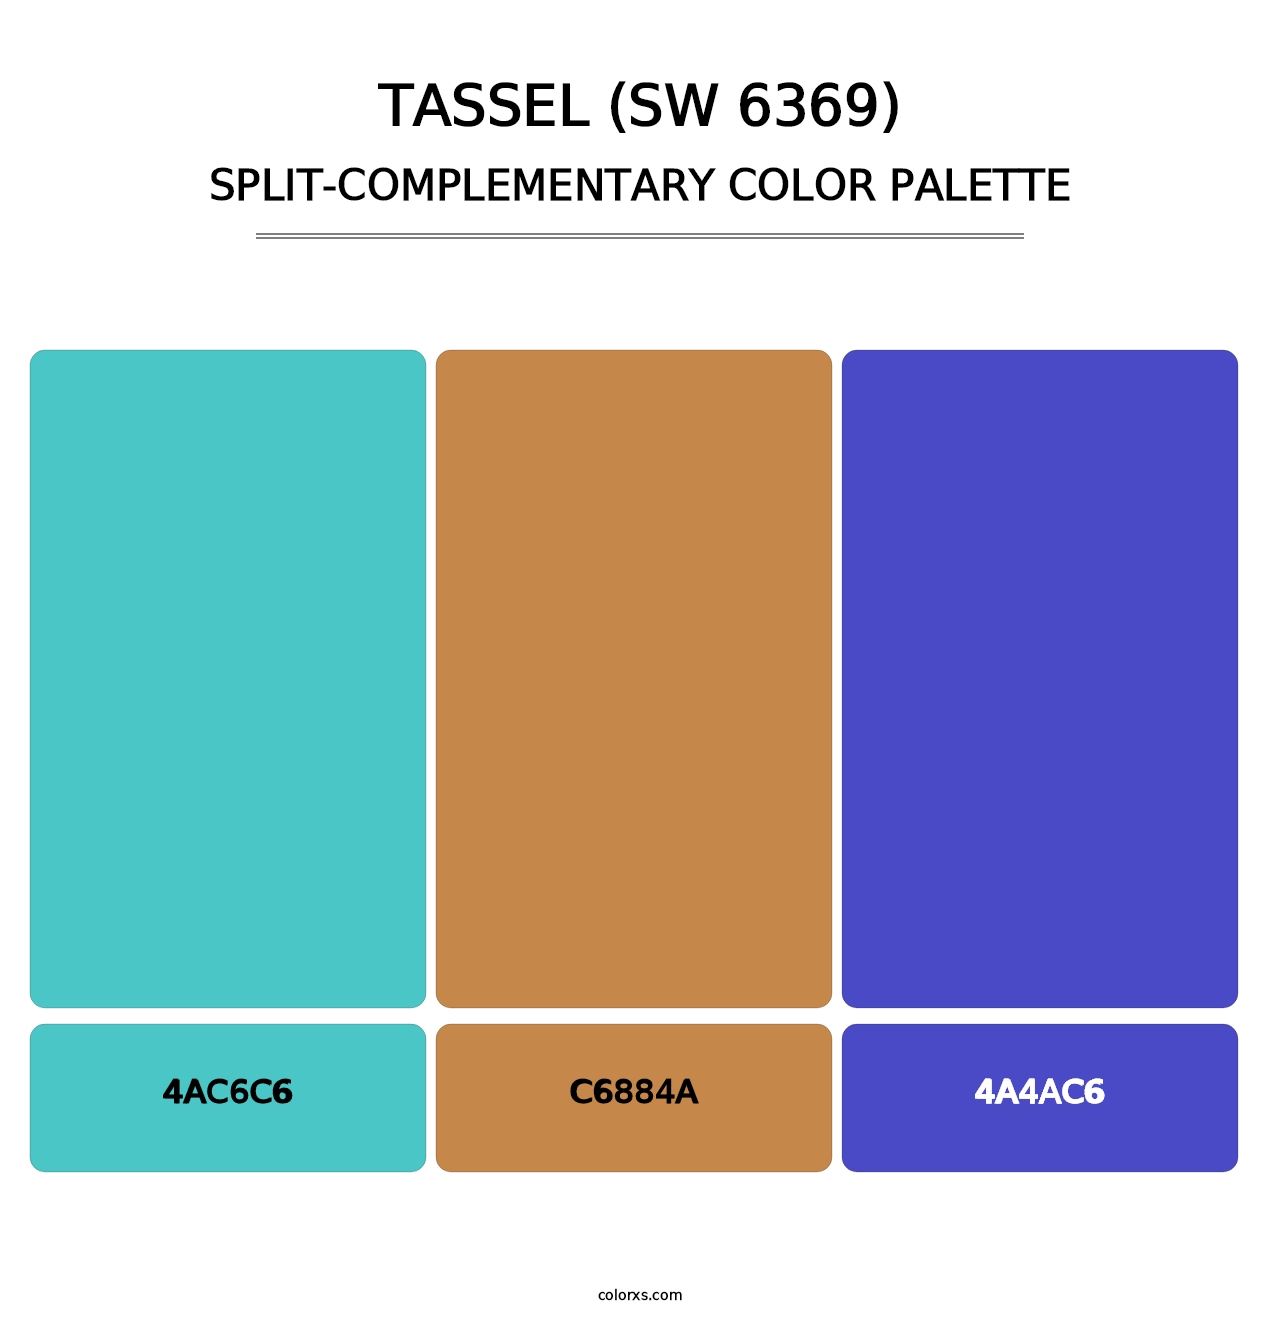 Tassel (SW 6369) - Split-Complementary Color Palette